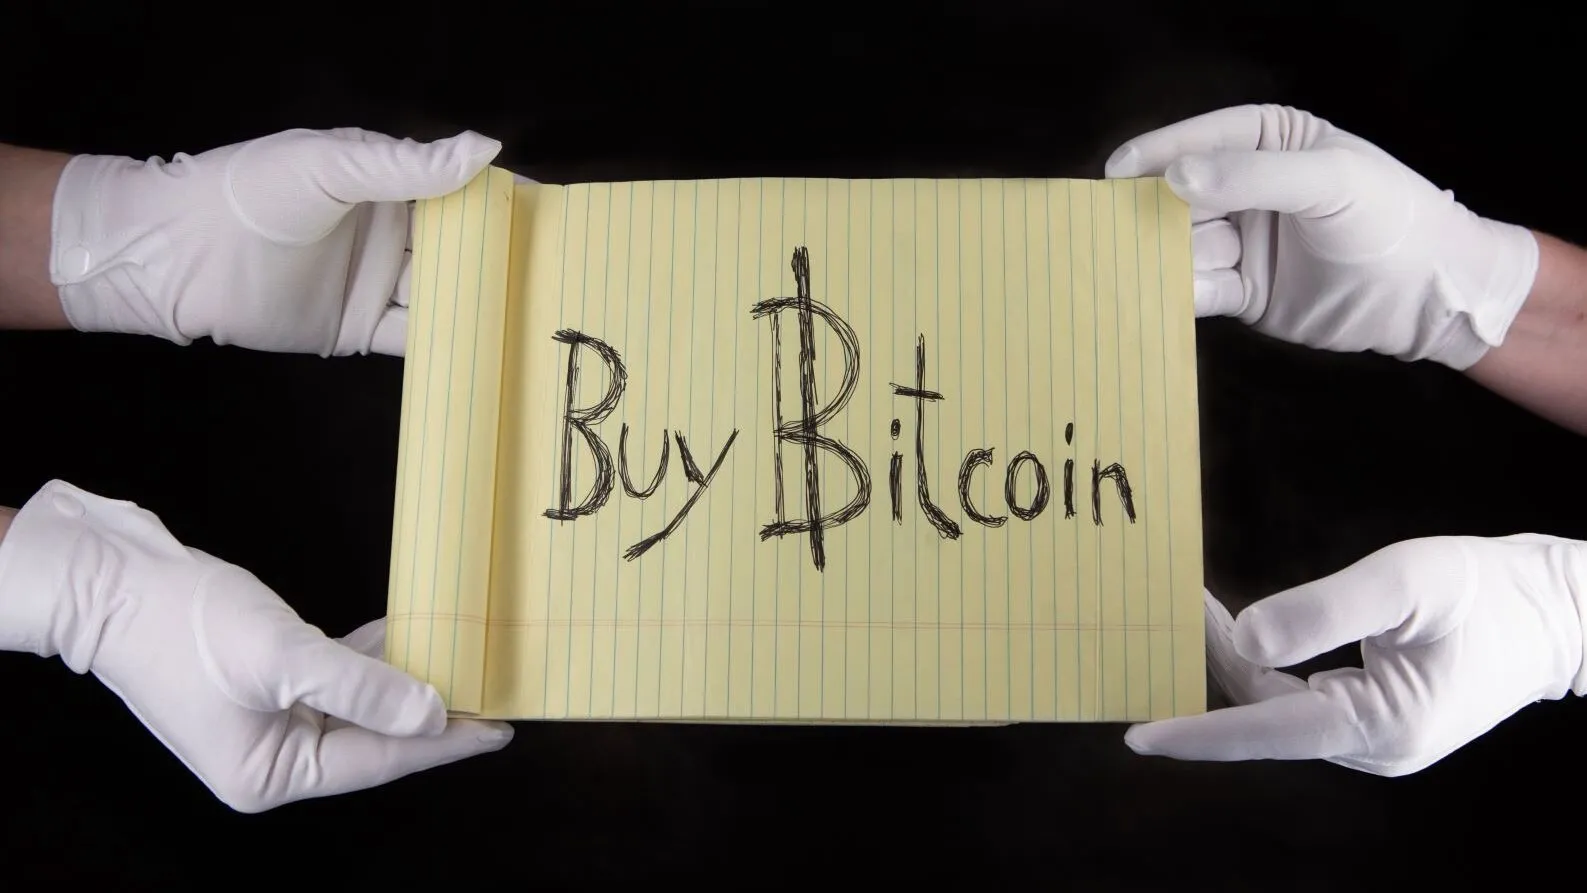 The "Buy Bitcoin" sign. Image: Scarce.City